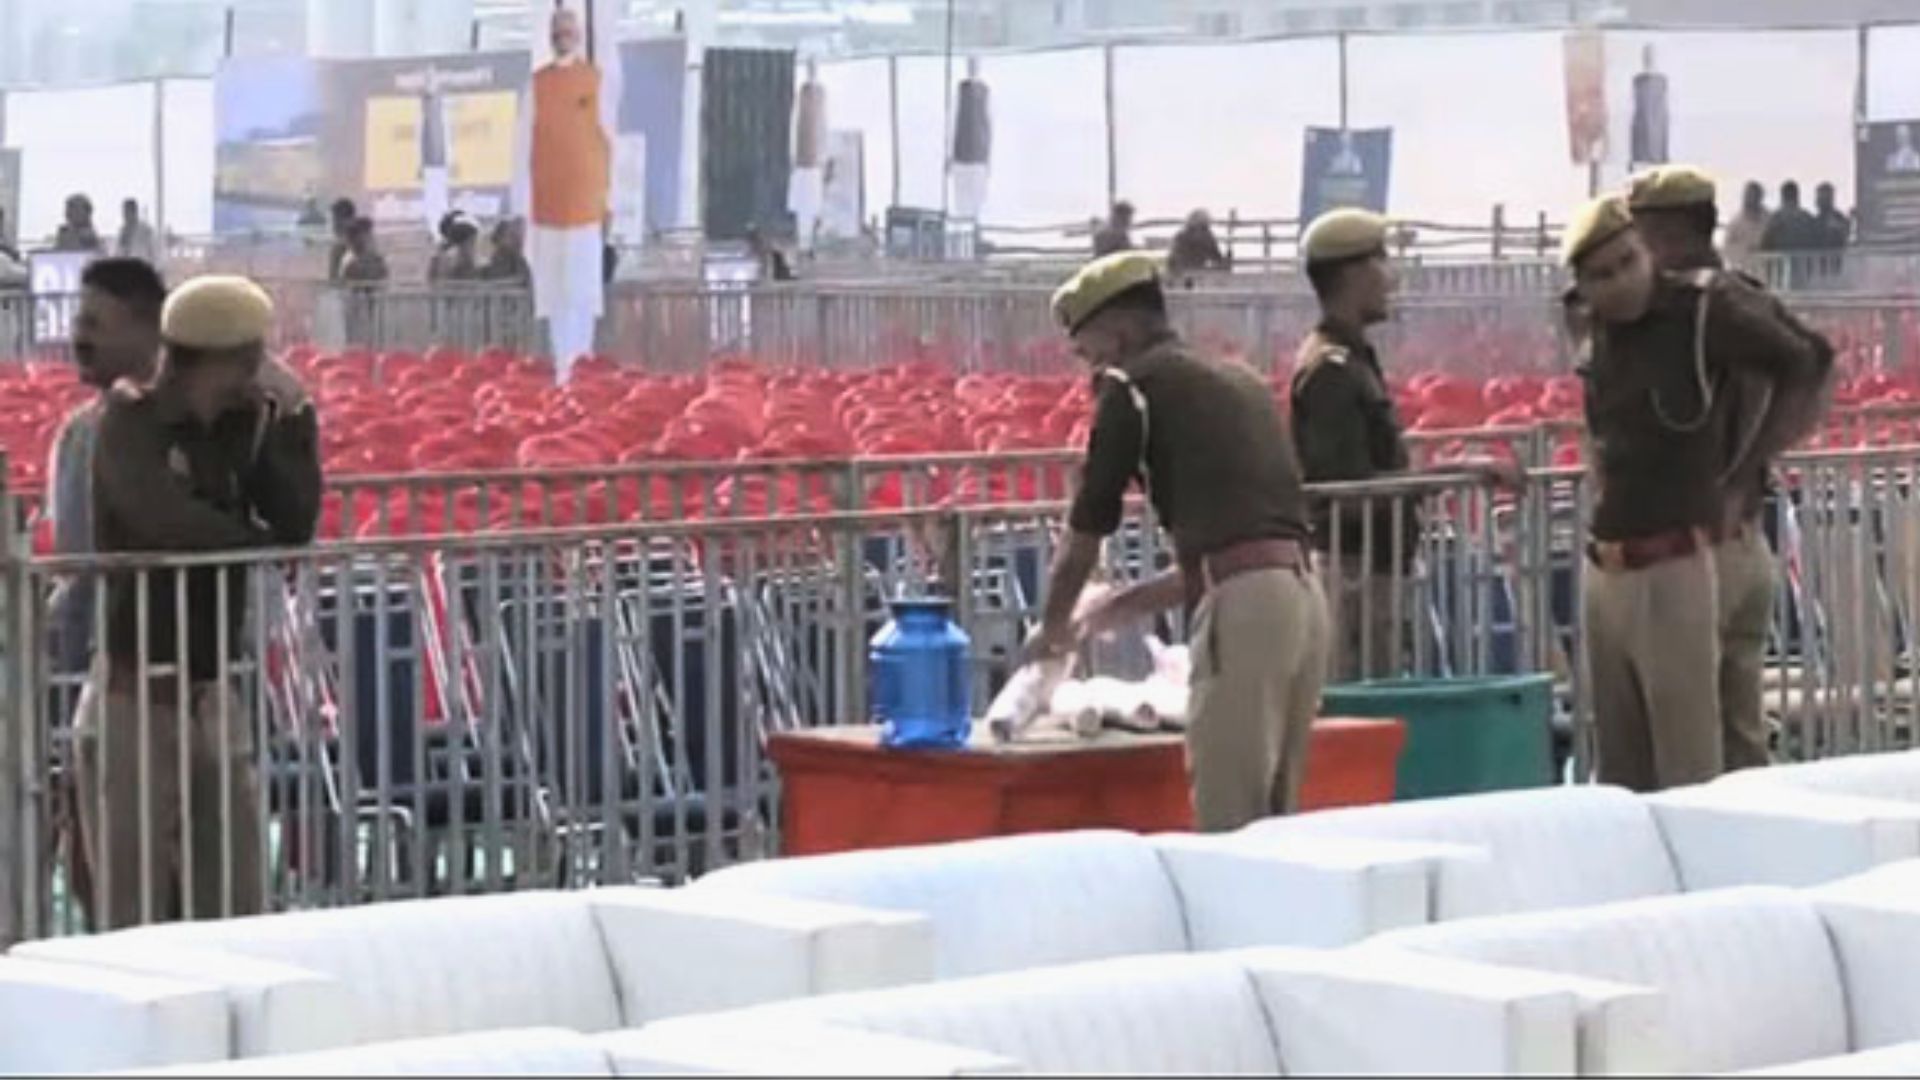 Security stepped up in Varanasi ahead of PM Modi’s visit